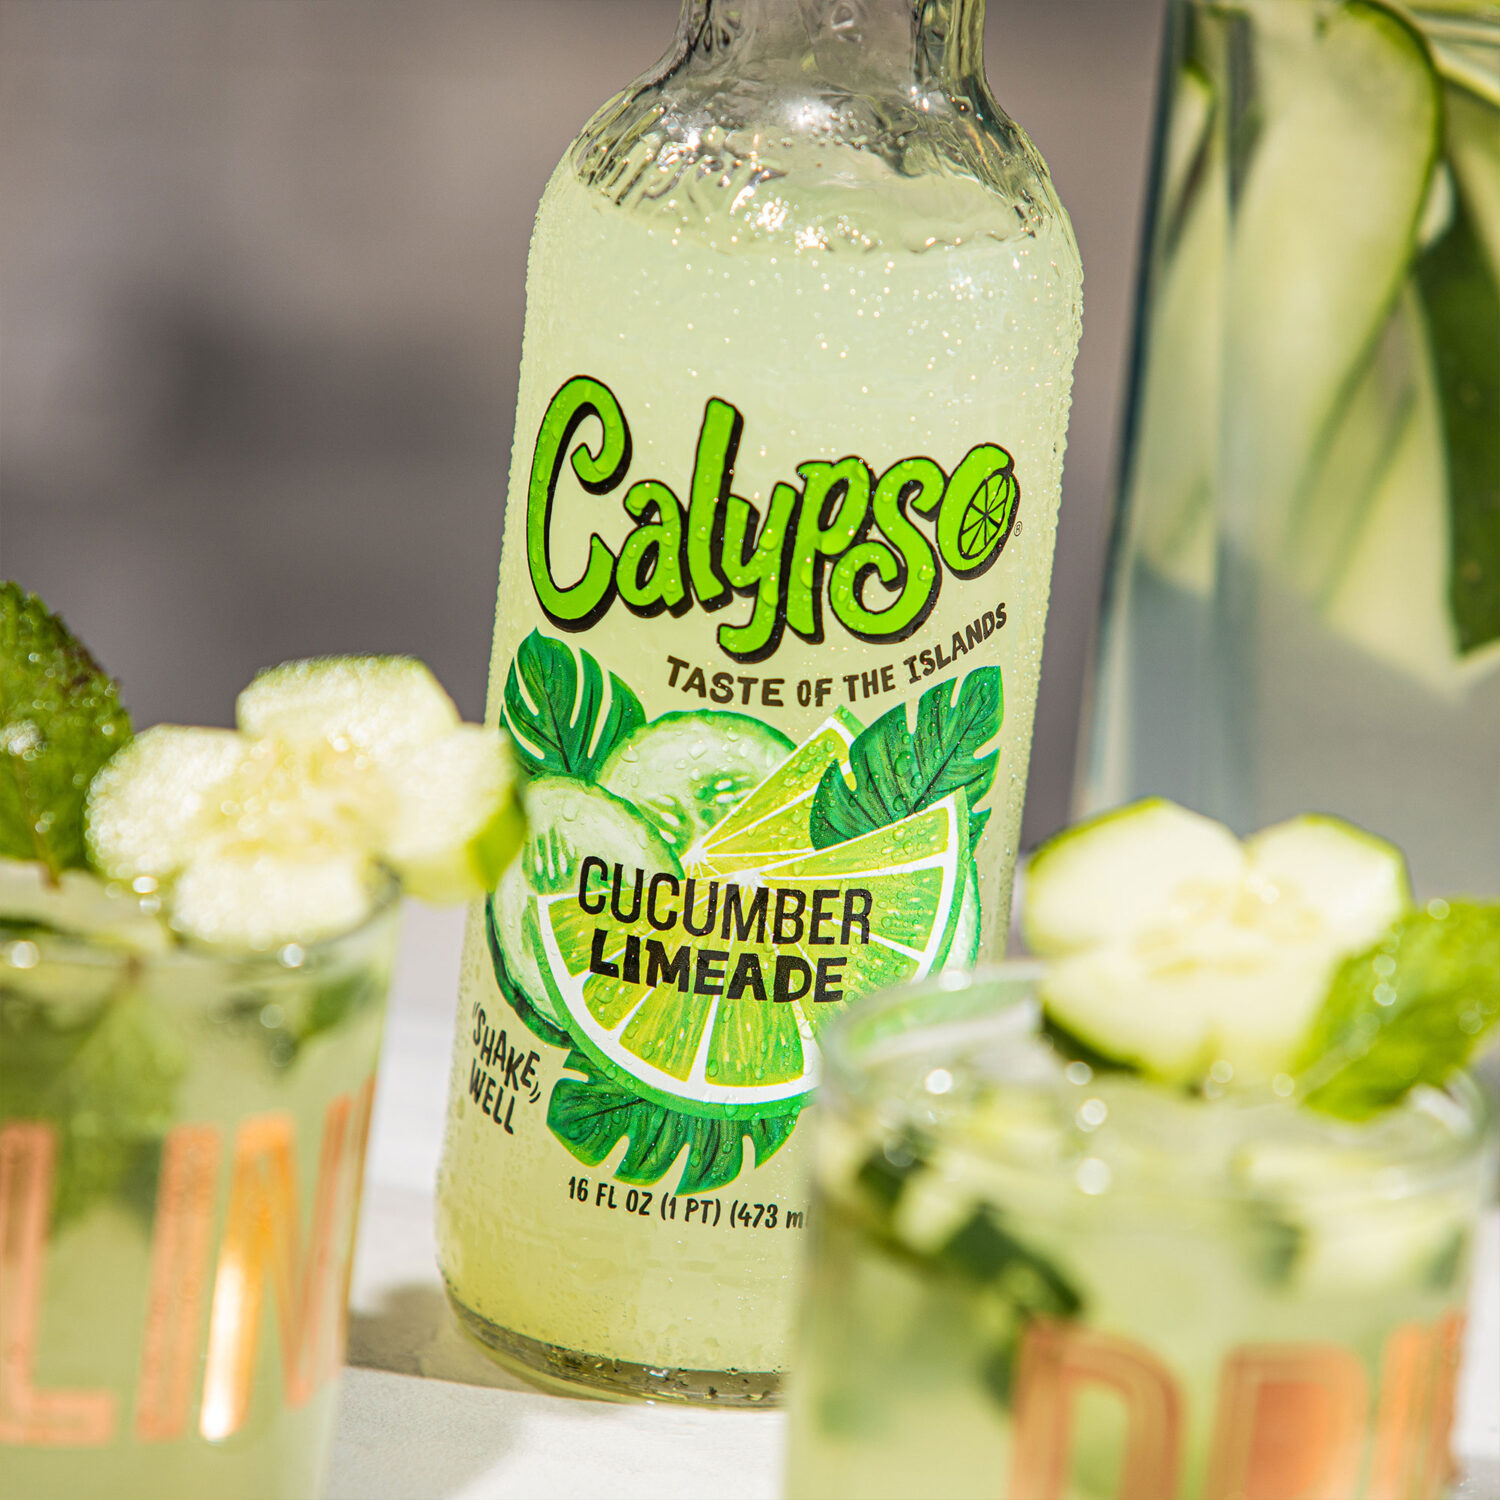 Calypso Cucumber Limeade cocktails.